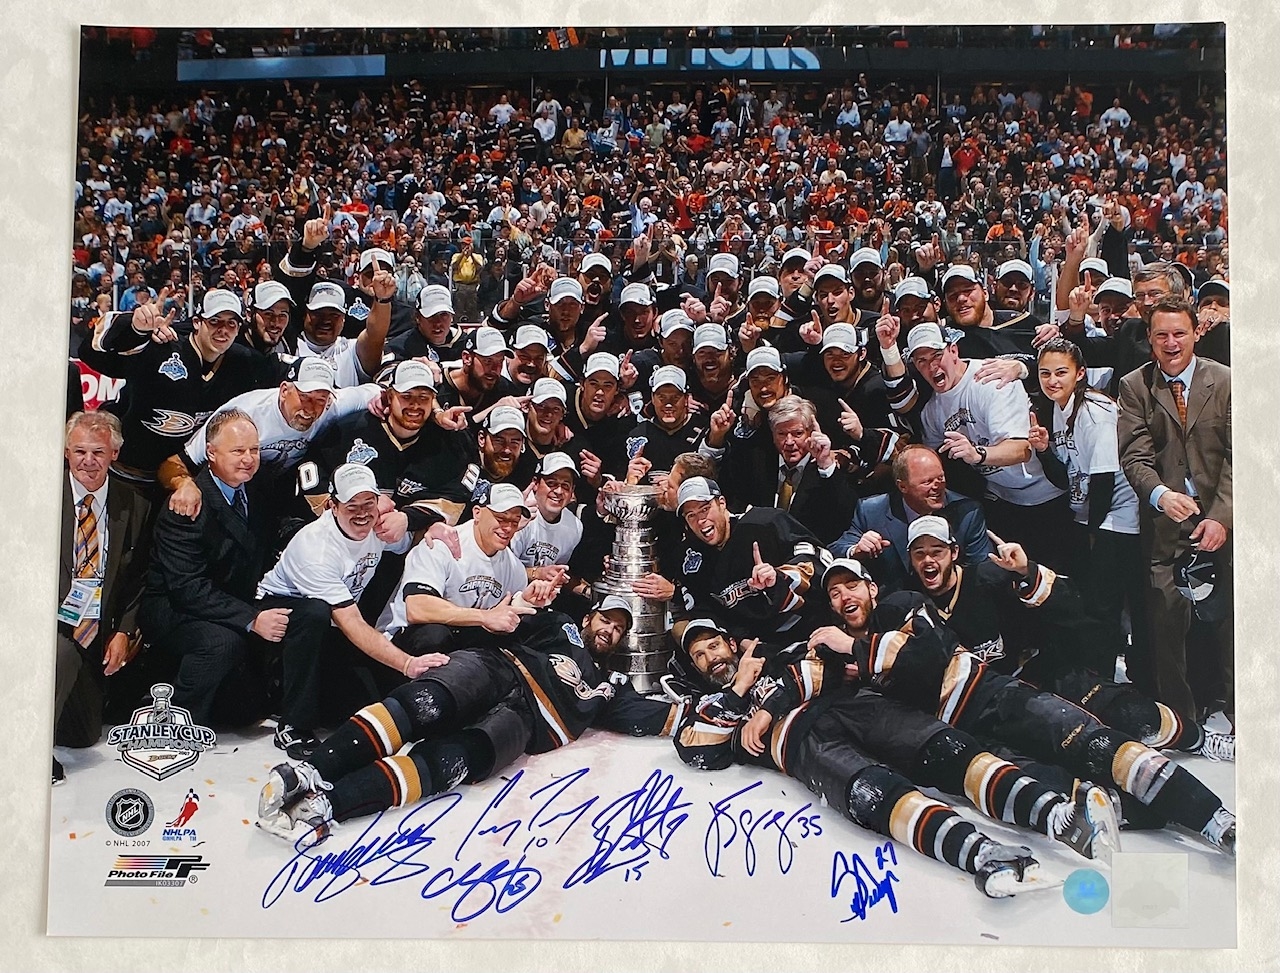 Anaheim Ducks Signed Stanley Cup 16x20 Photo: Niedermayer, Selanne, Pronger, Getzlaf, Perry, Giguere